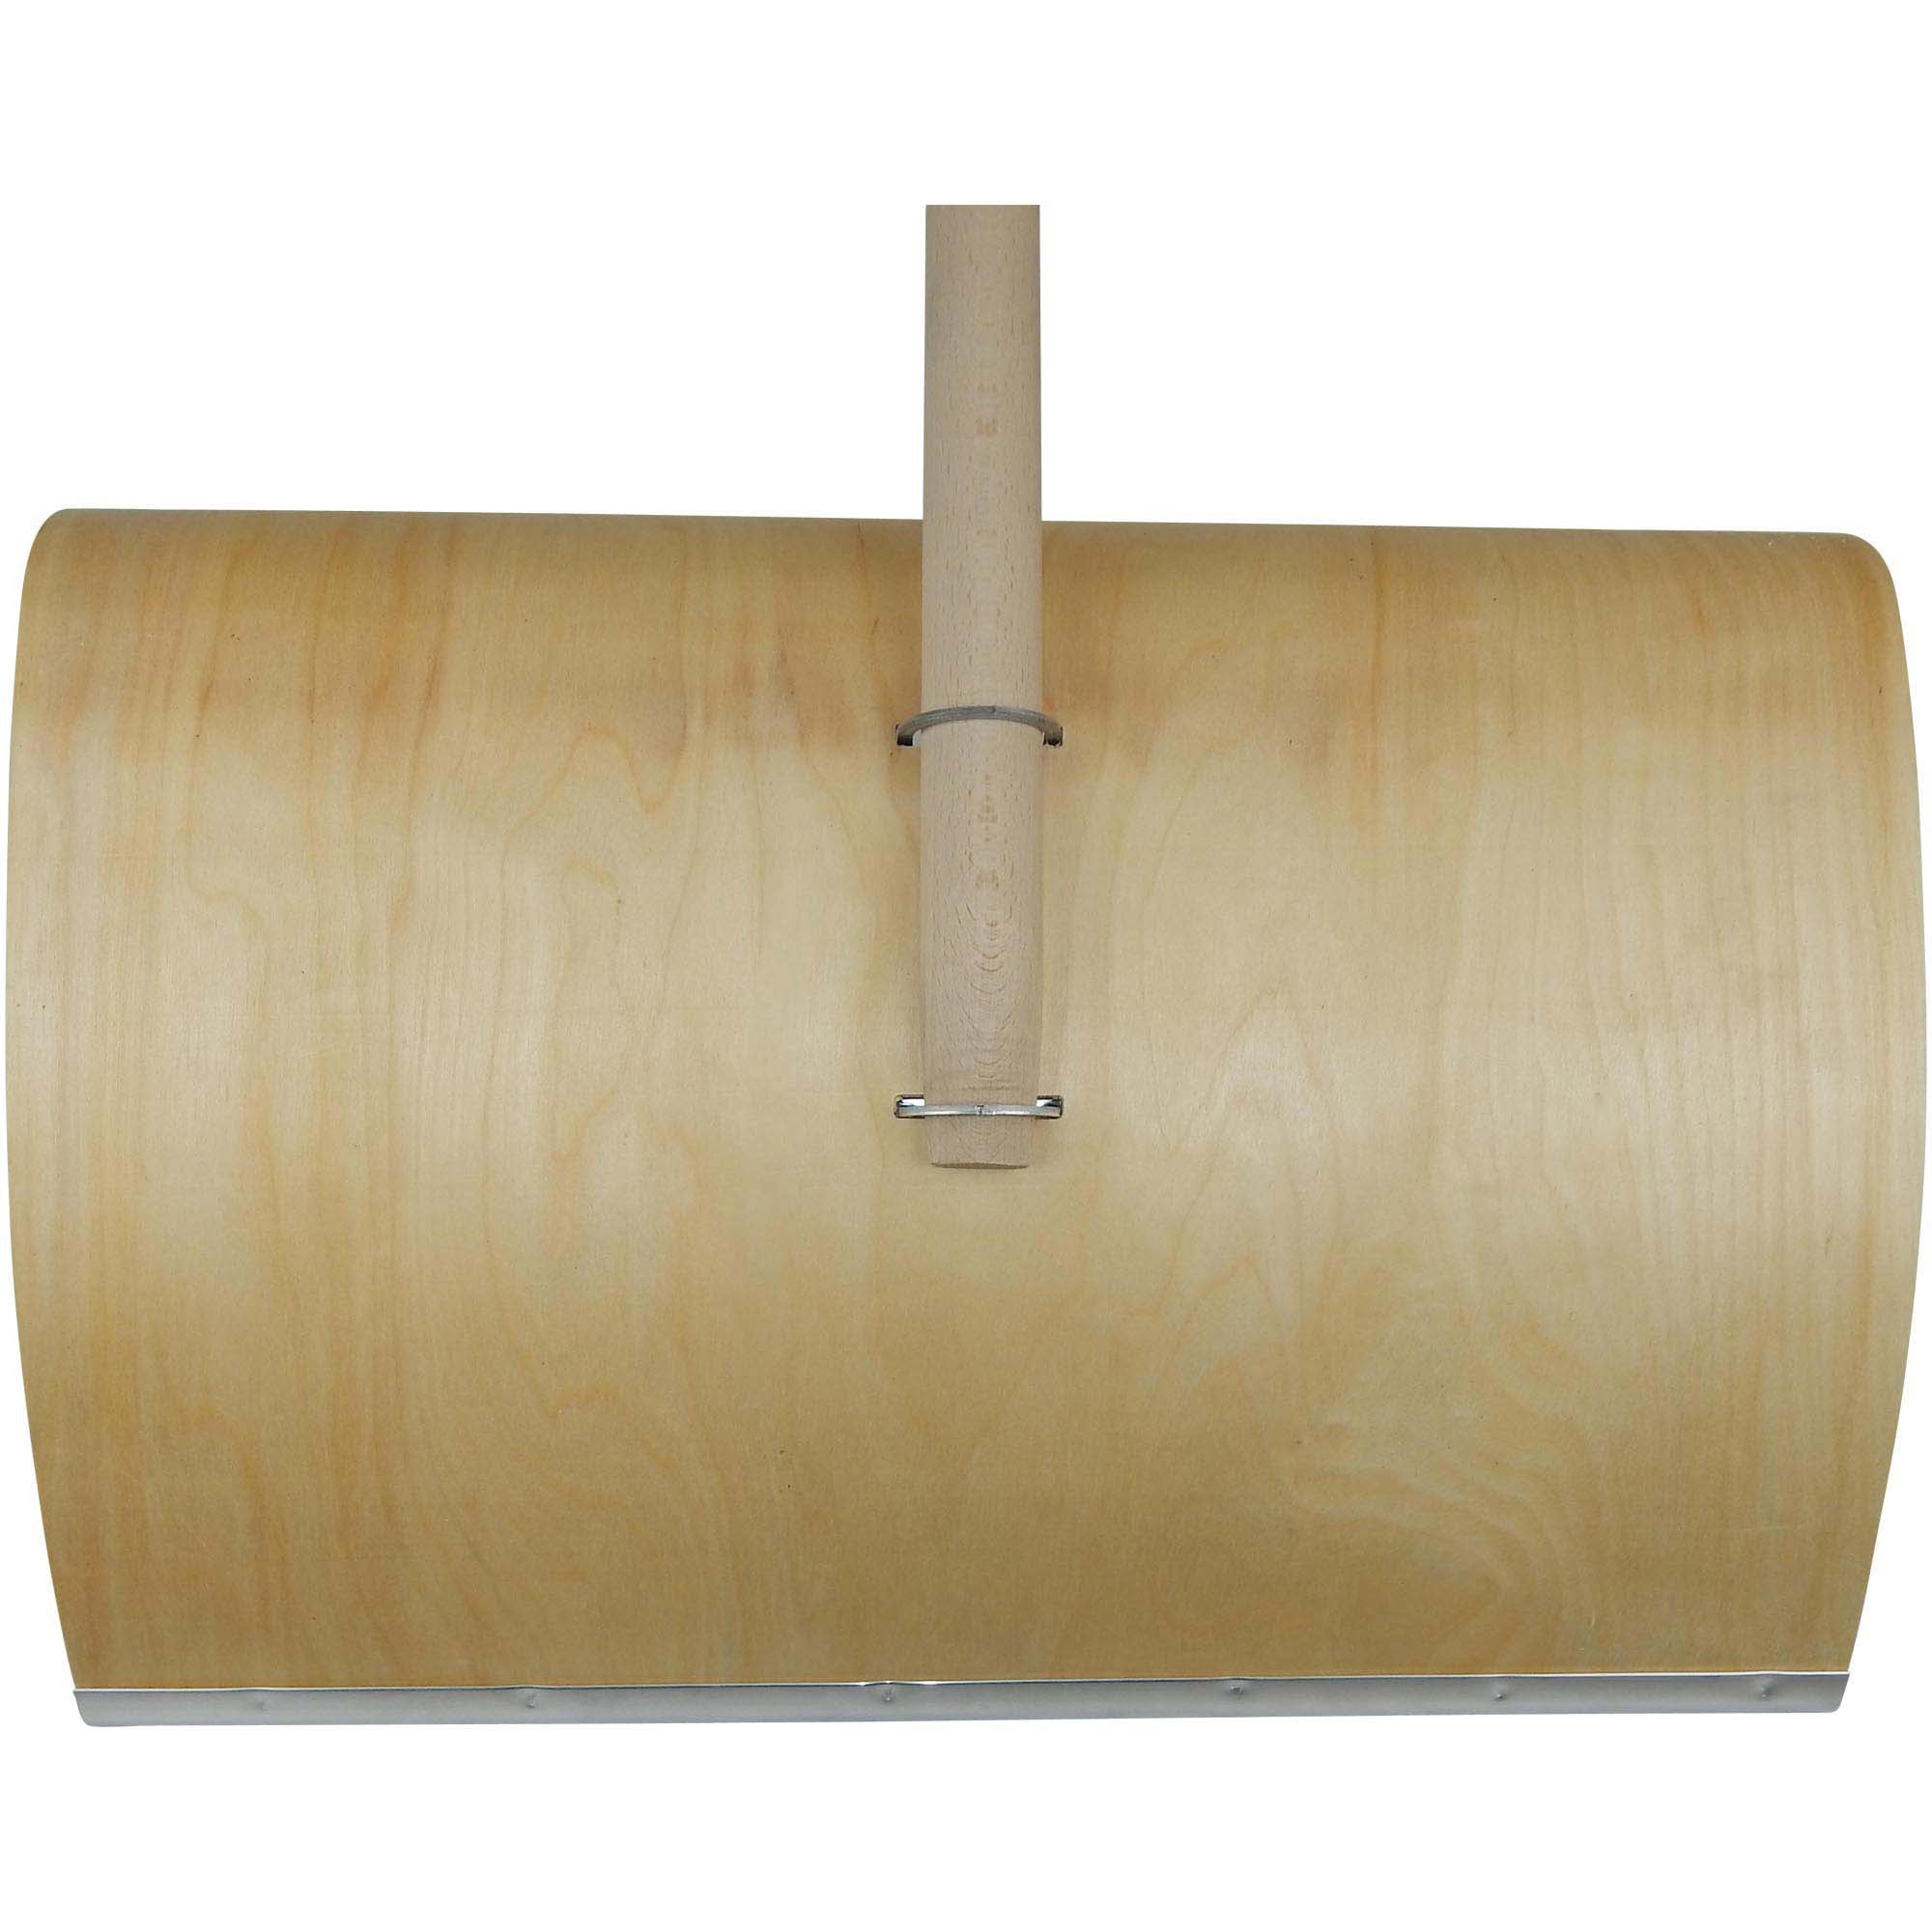 SHW Schneeschieber-Sperrholz Blatt 5-fach verleimt, 50 cm breit,  mit Holzstiel 1300 mm